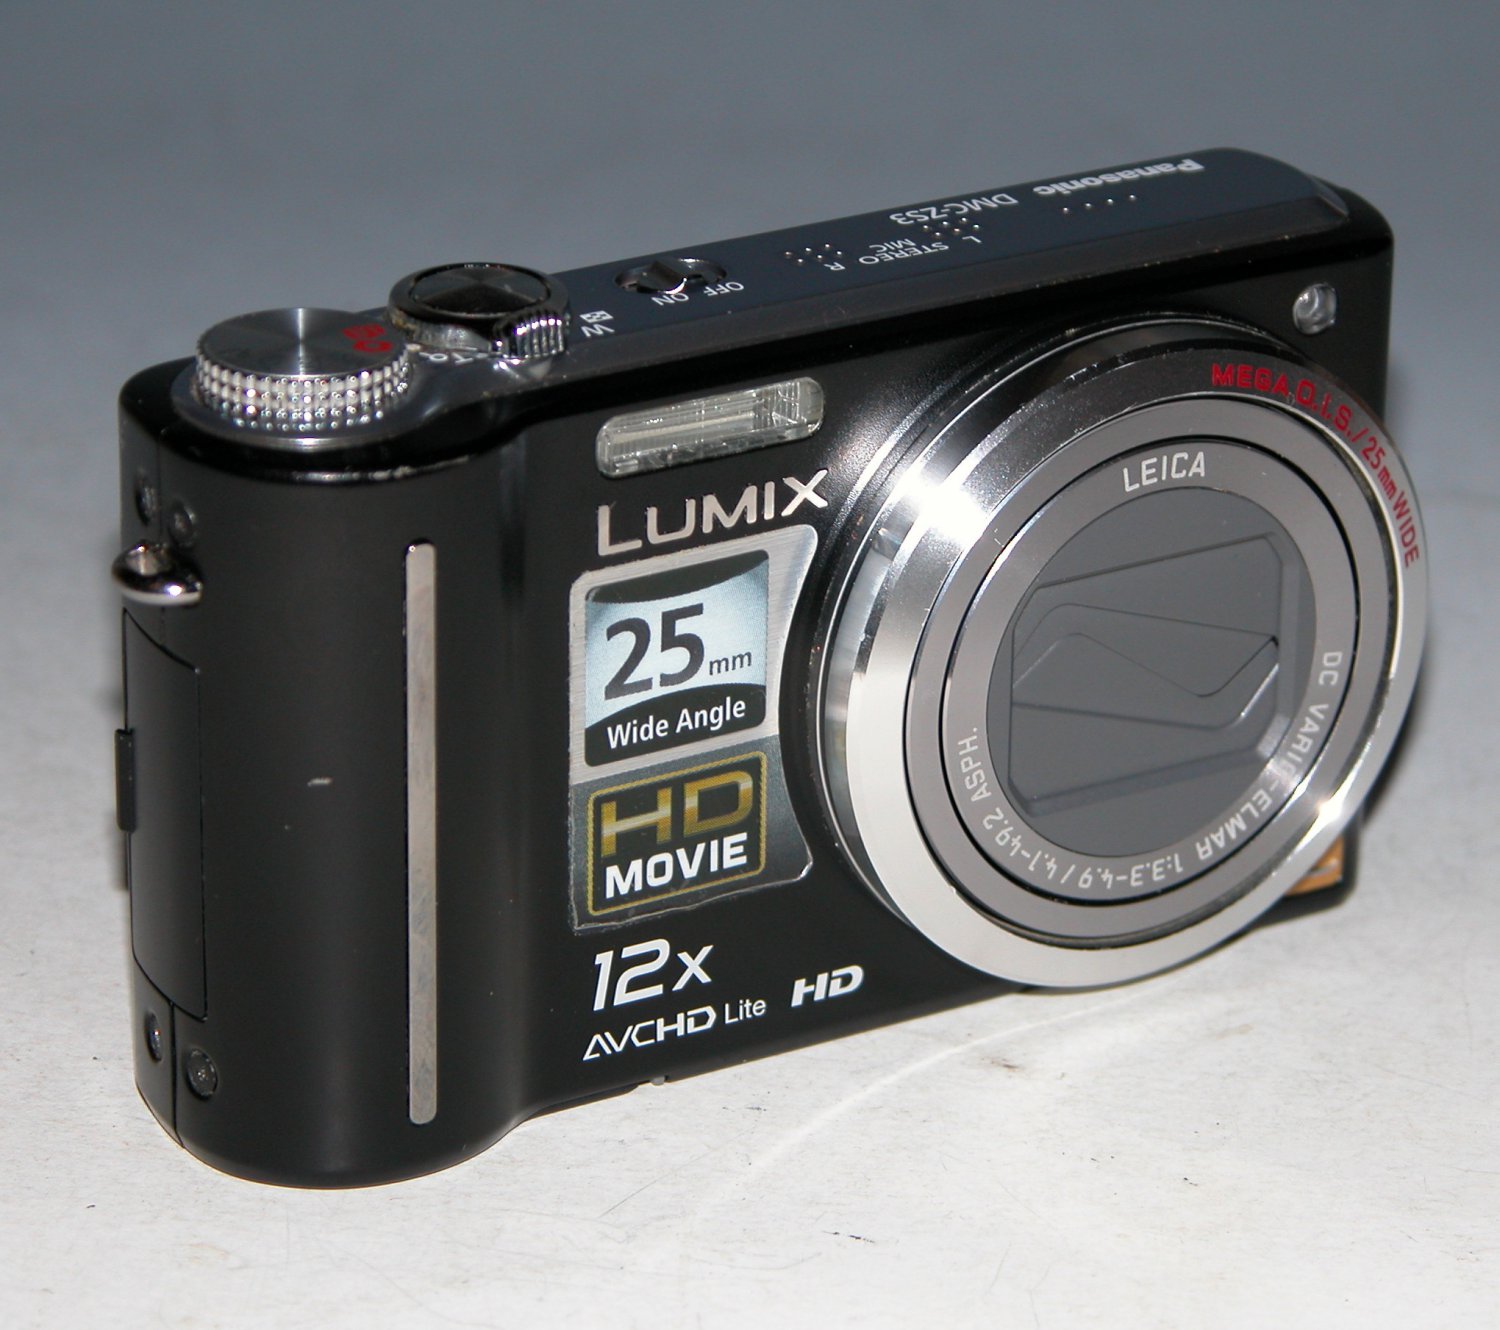 Panasonic LUMIX DMC-ZS3 10.1 MP Digital Camera - Black #9104